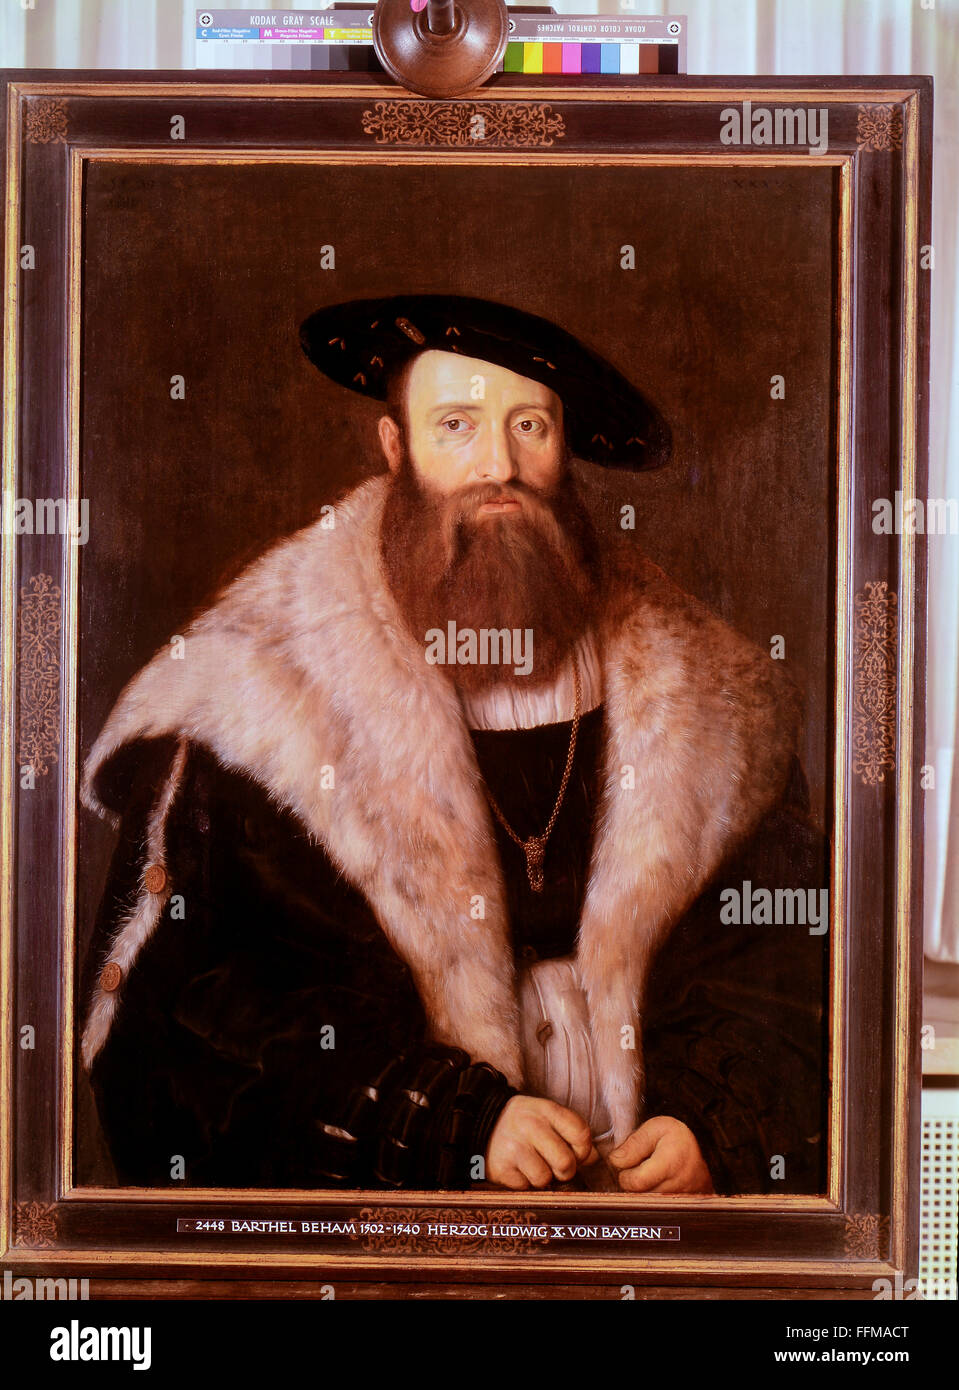 Louis X, 18.9.1495 - 22.4.1545, Duke od Bavaria 29.9.1514 - 22.4.1545, picture, painting by Barthel Beham, tempera on wood, 1530, Alte Pinakothek, Munich, Stock Photo